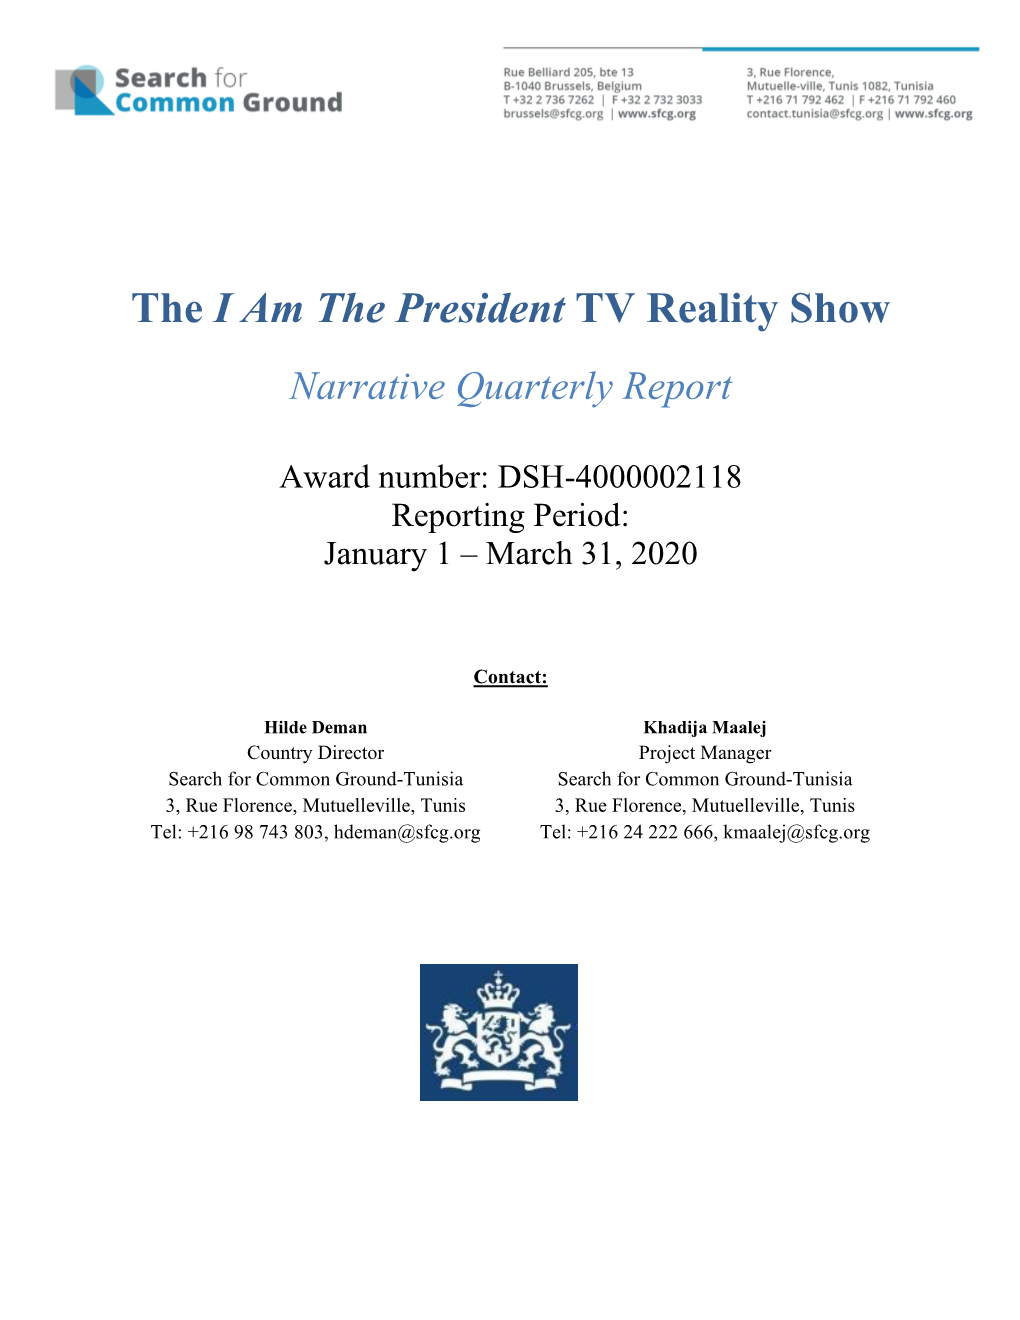 The I Am the President TV Reality Show Narrative Quarterly Report